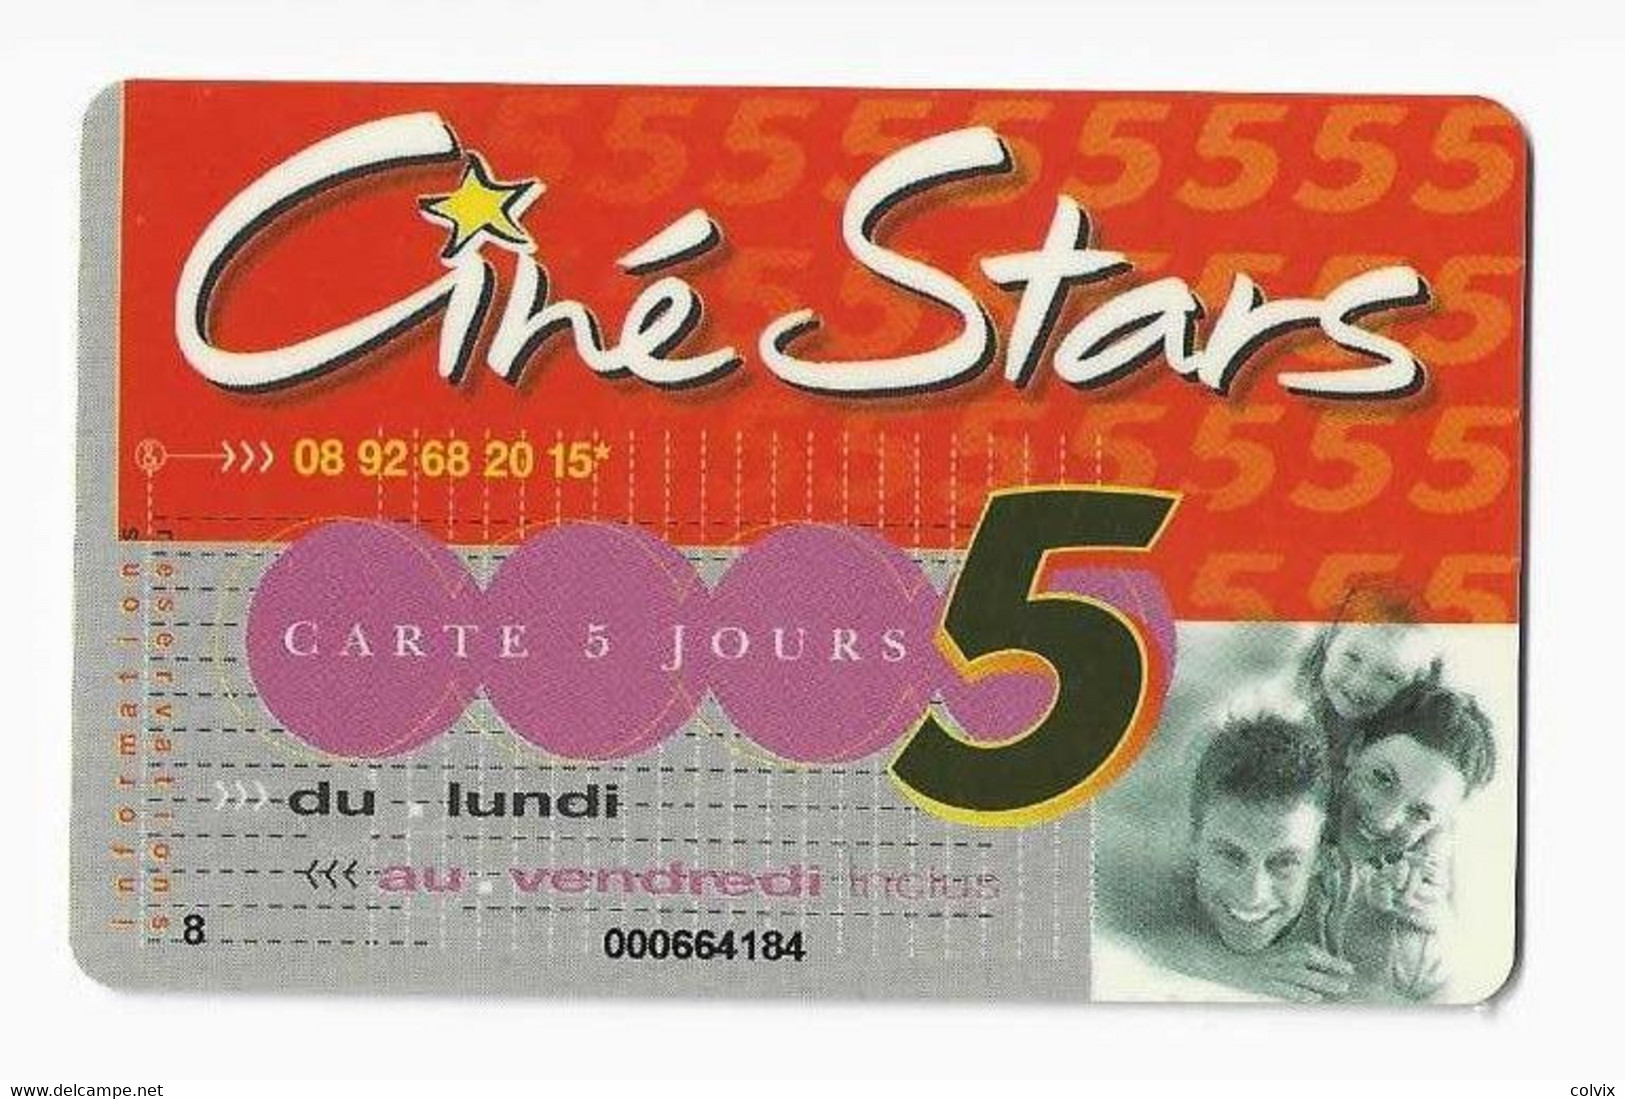 FRANCE CARTE CINEMA CINE STARS 5 JOURS - Movie Cards